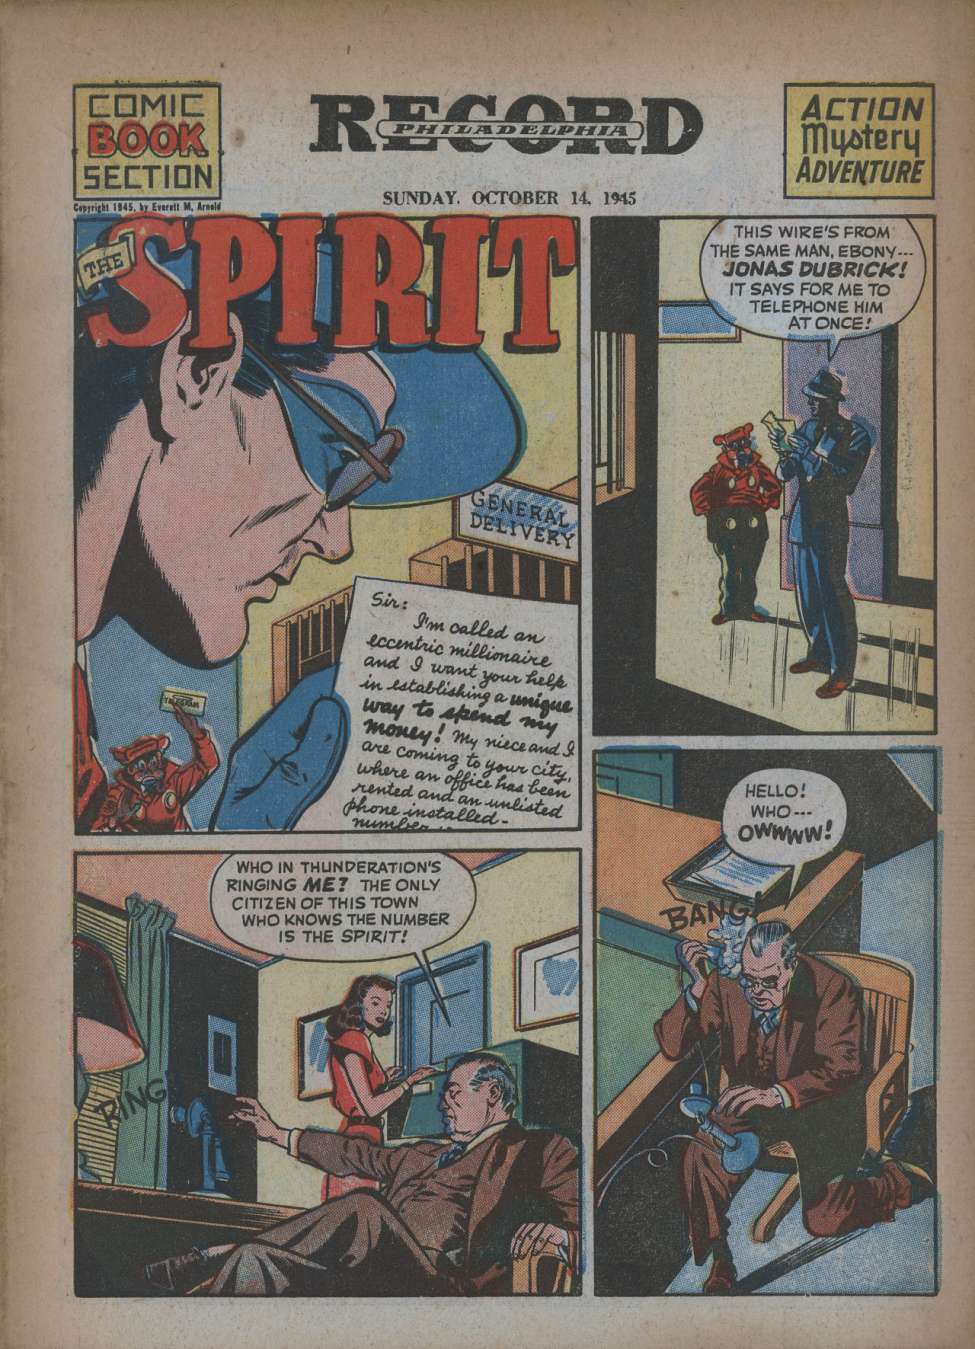 Comic Book Cover For The Spirit (1945-10-14) - Philadelphia Record